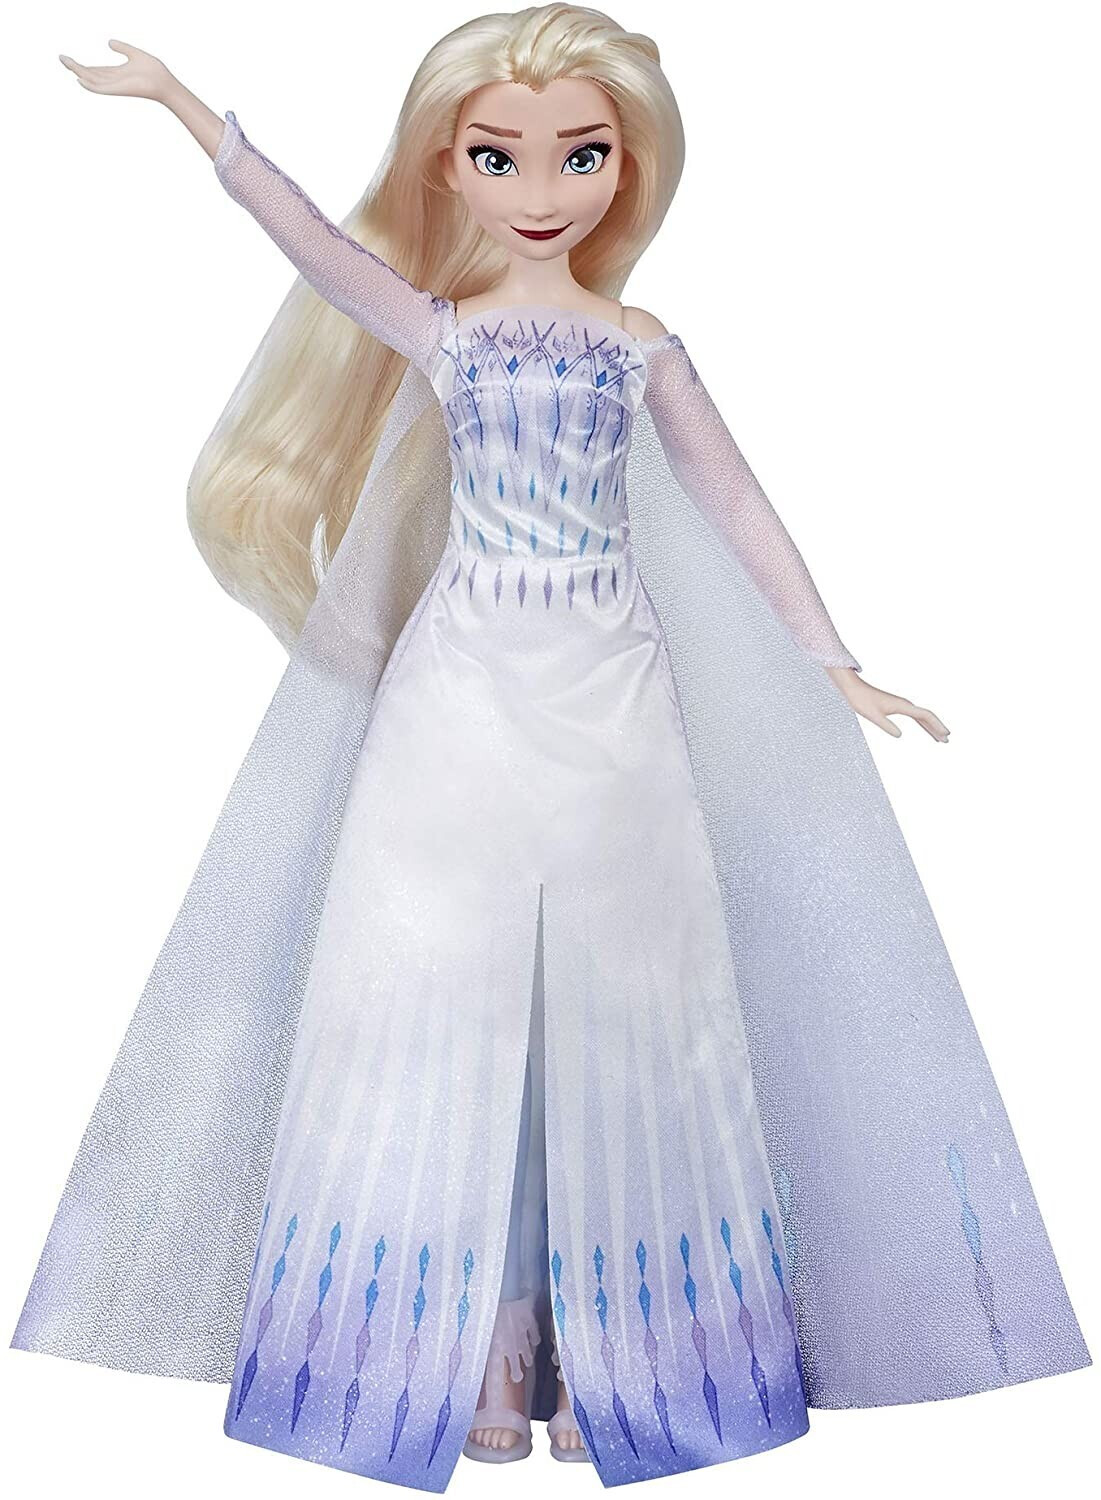 Hasbro Frozen 2 Musical Adventure Singing Elsa